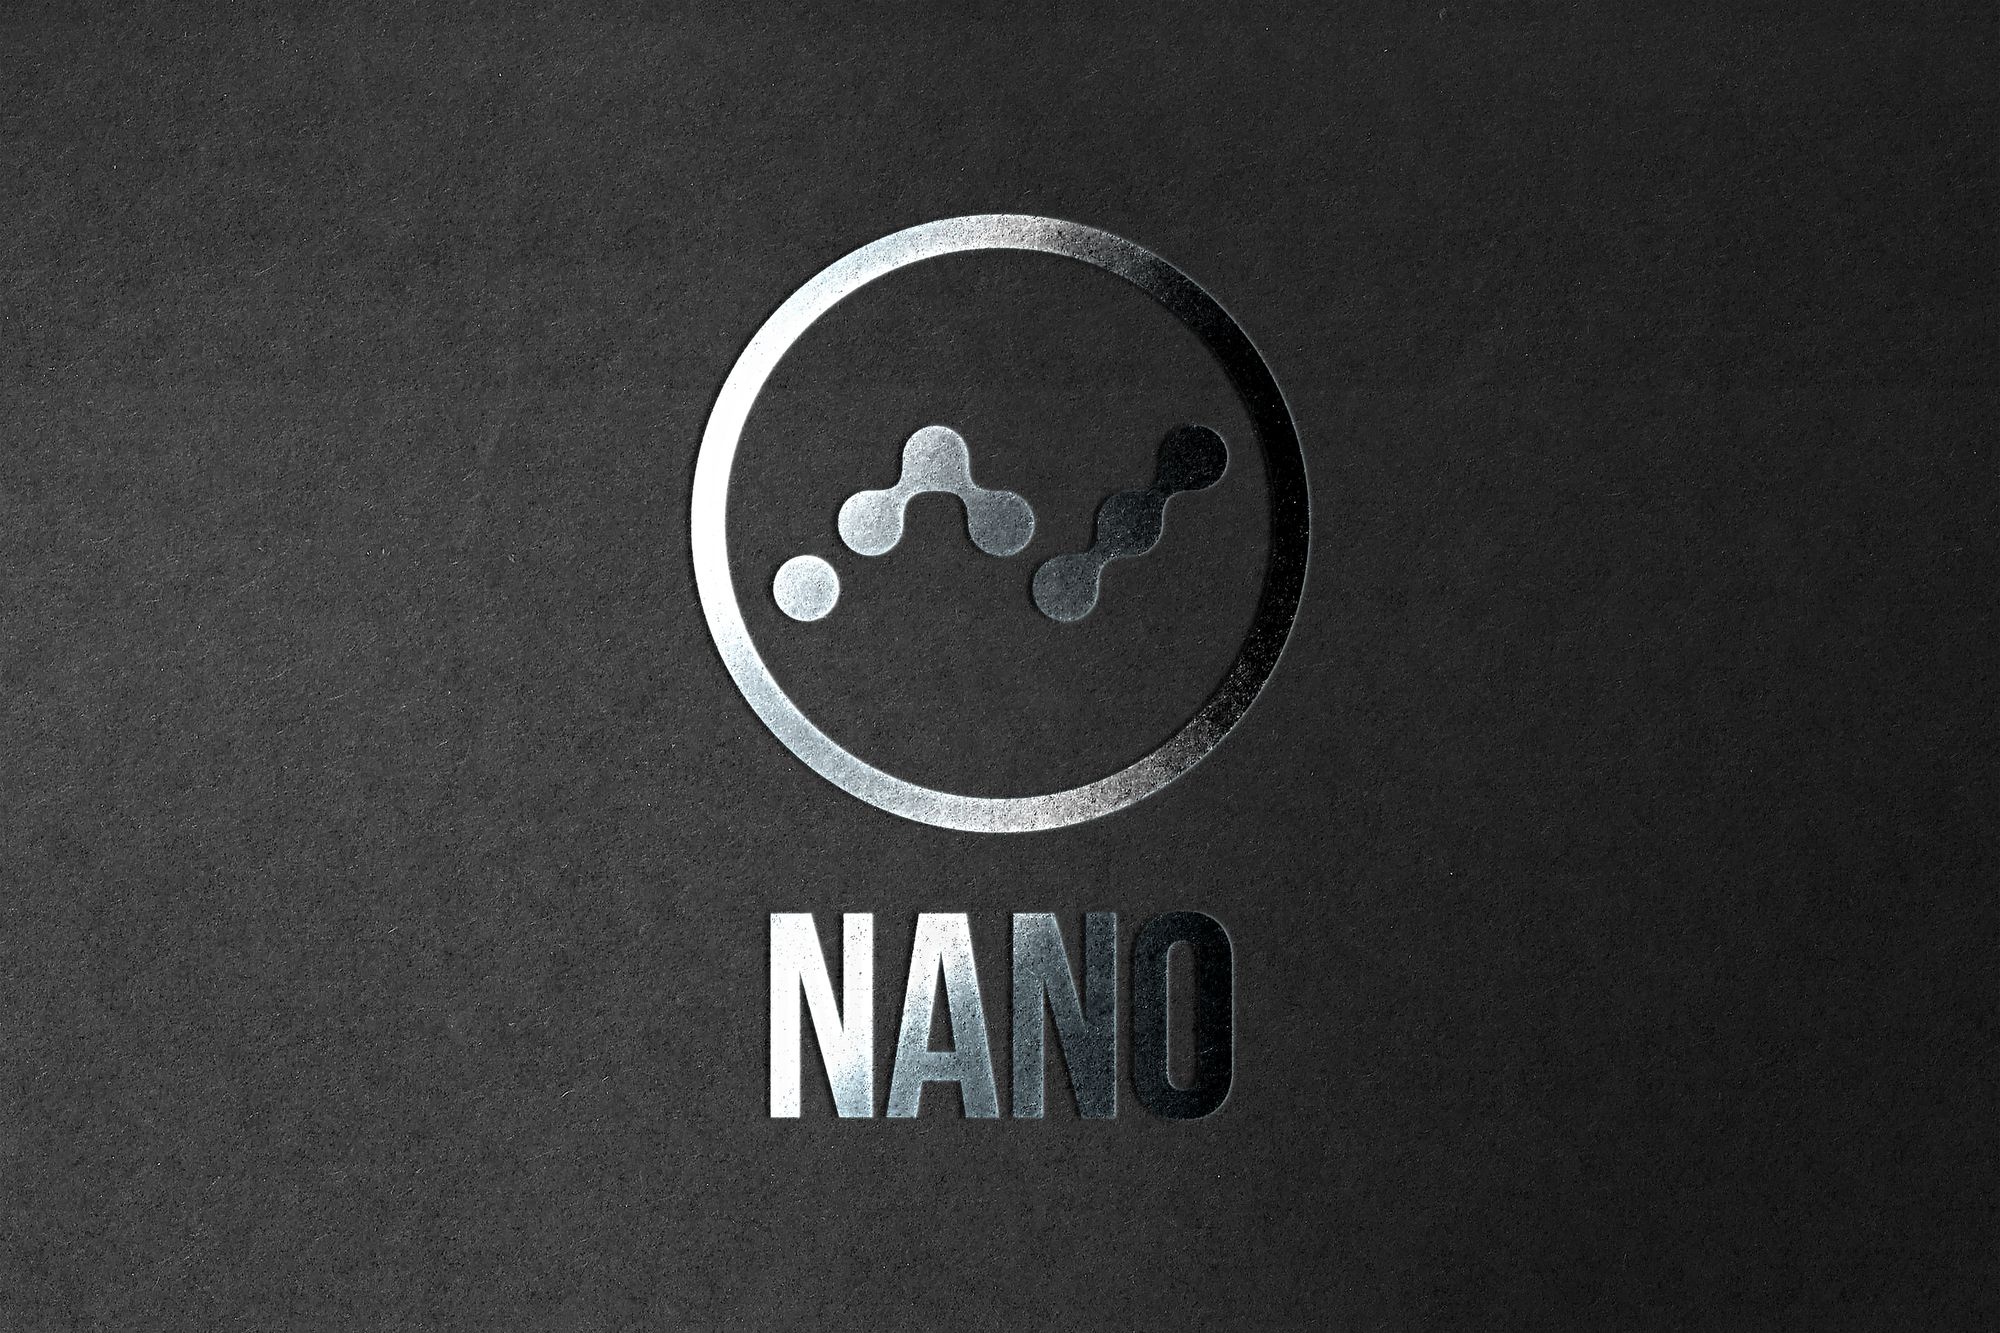 Nano price today, XNO to USD live price, marketcap and chart | CoinMarketCap